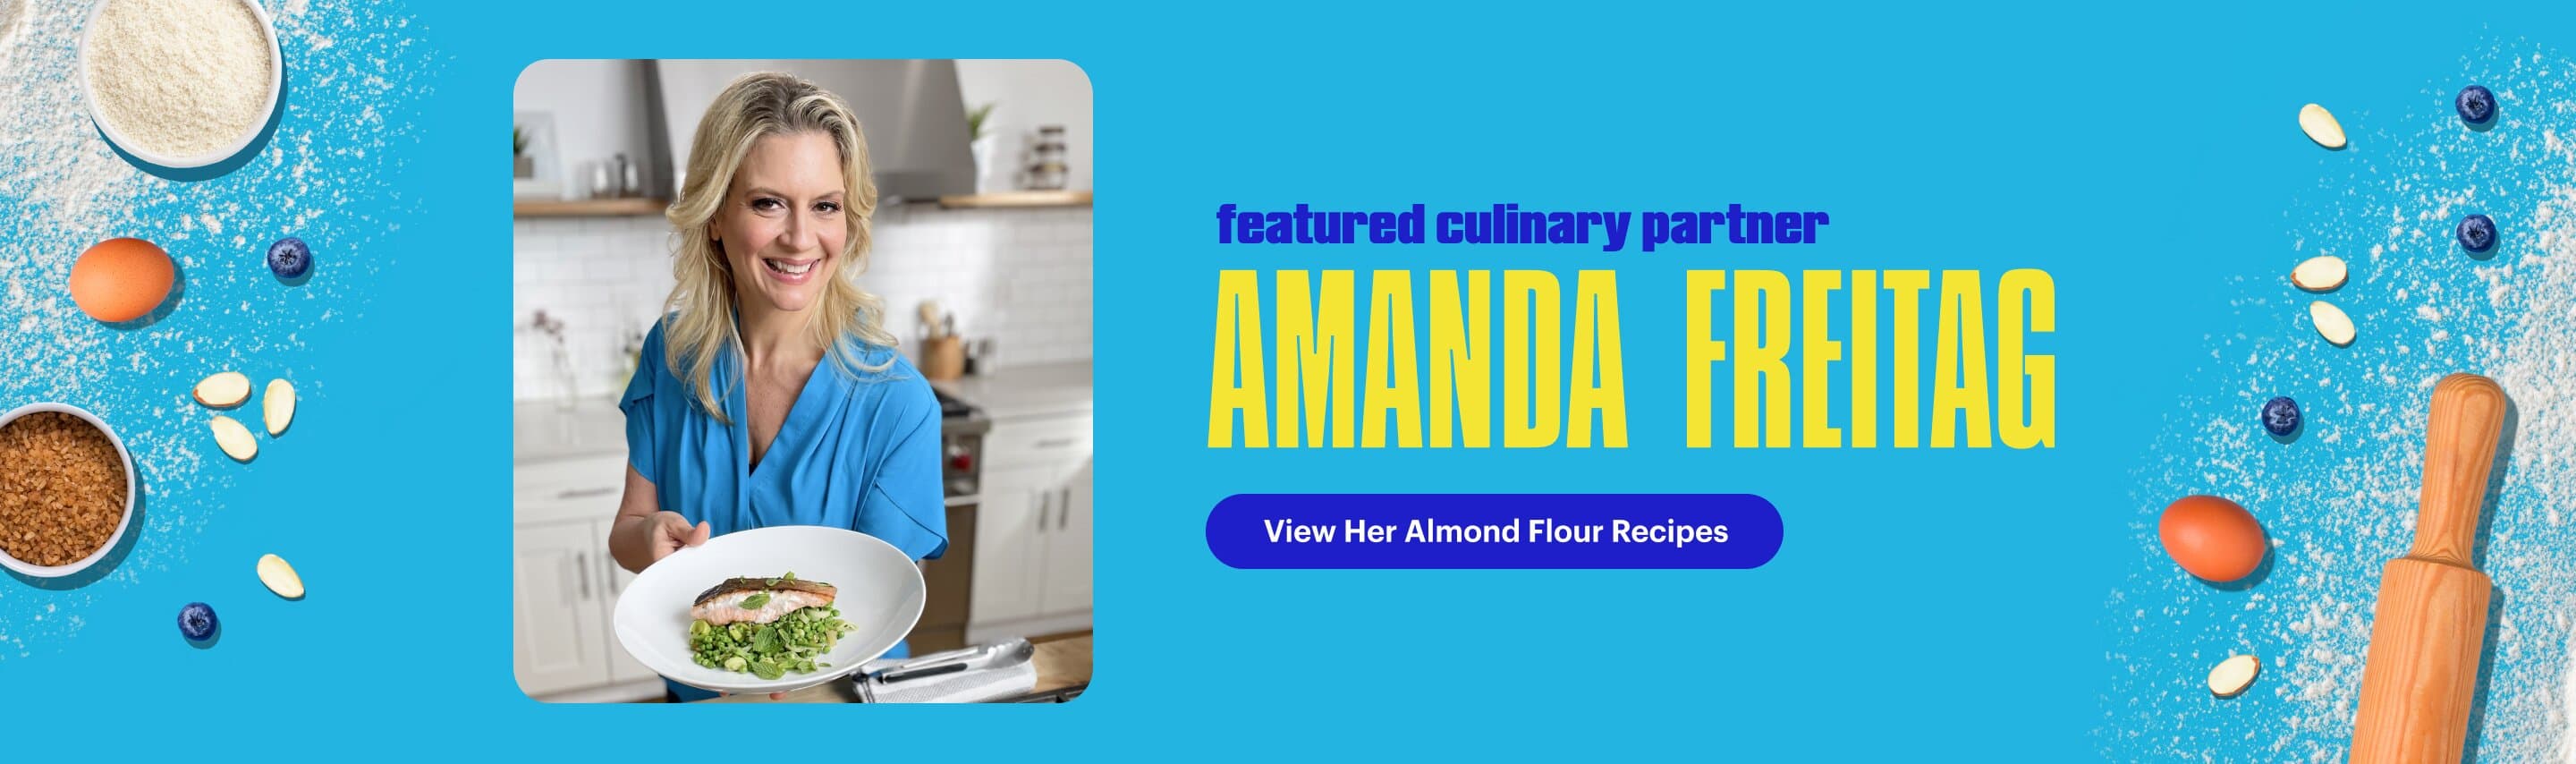 Featured Culinary Partner Amanda Freitag. View Her Almond Flour Recipes.